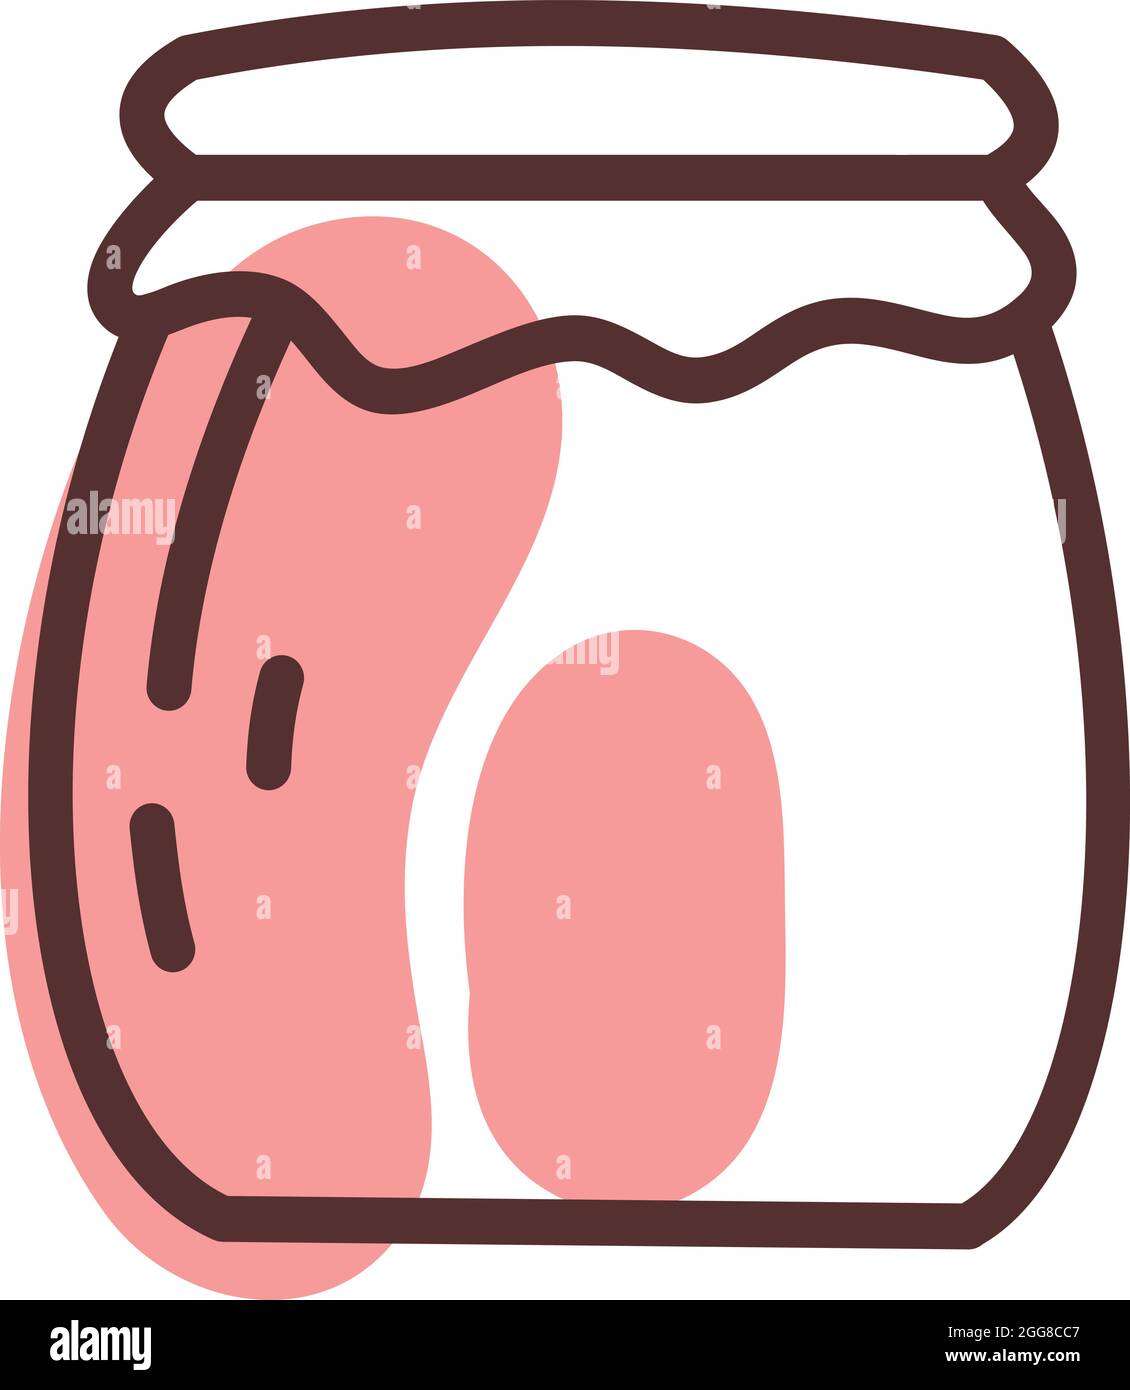 Tomato jam jar, illustration, vector on a white background. Stock Vector